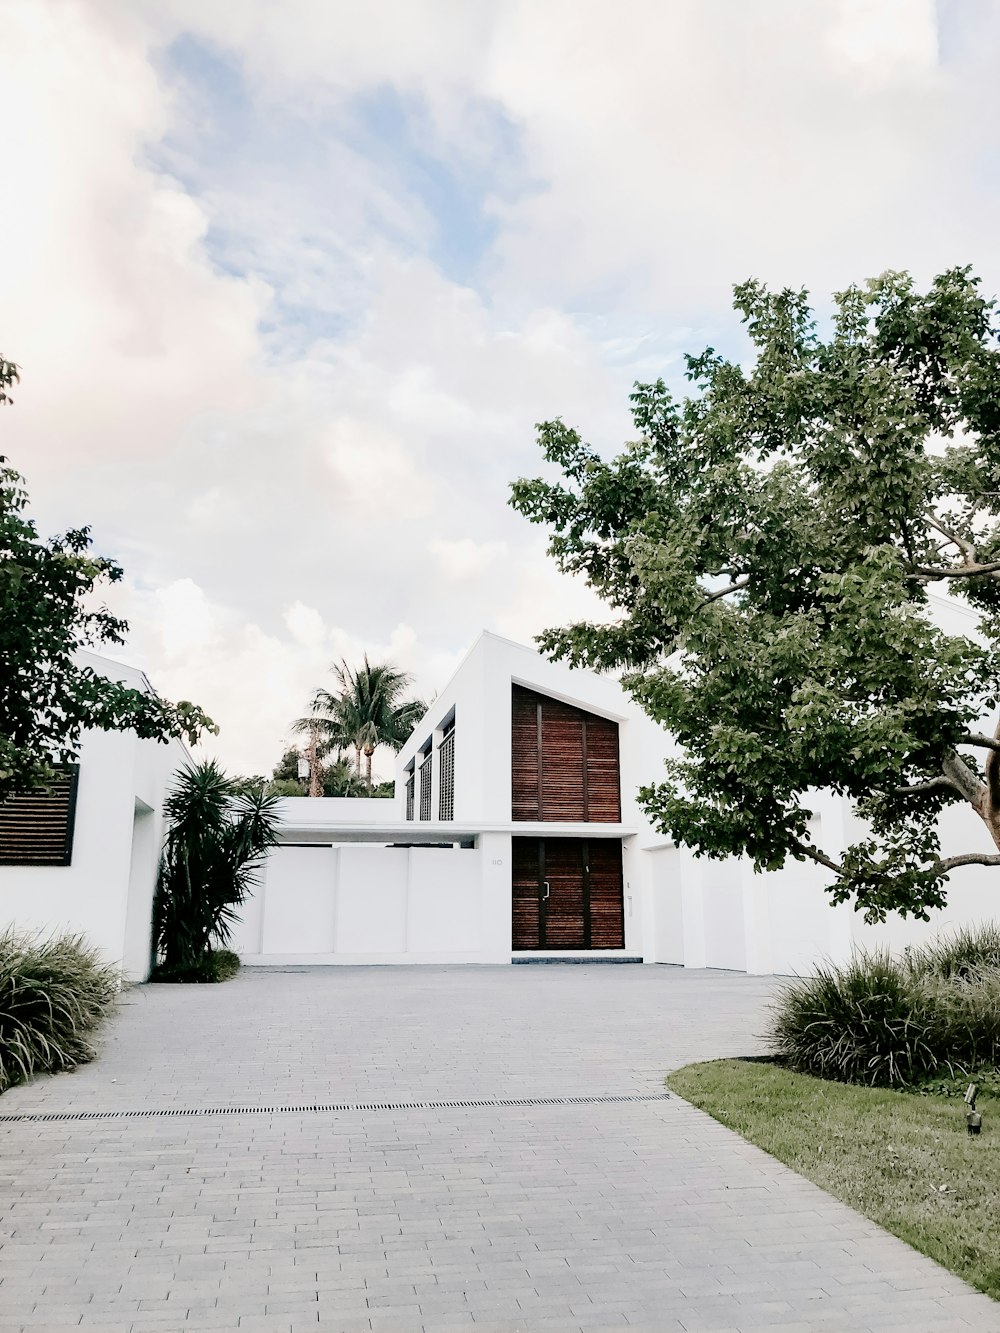 Casa de concreto branco cercada de árvores